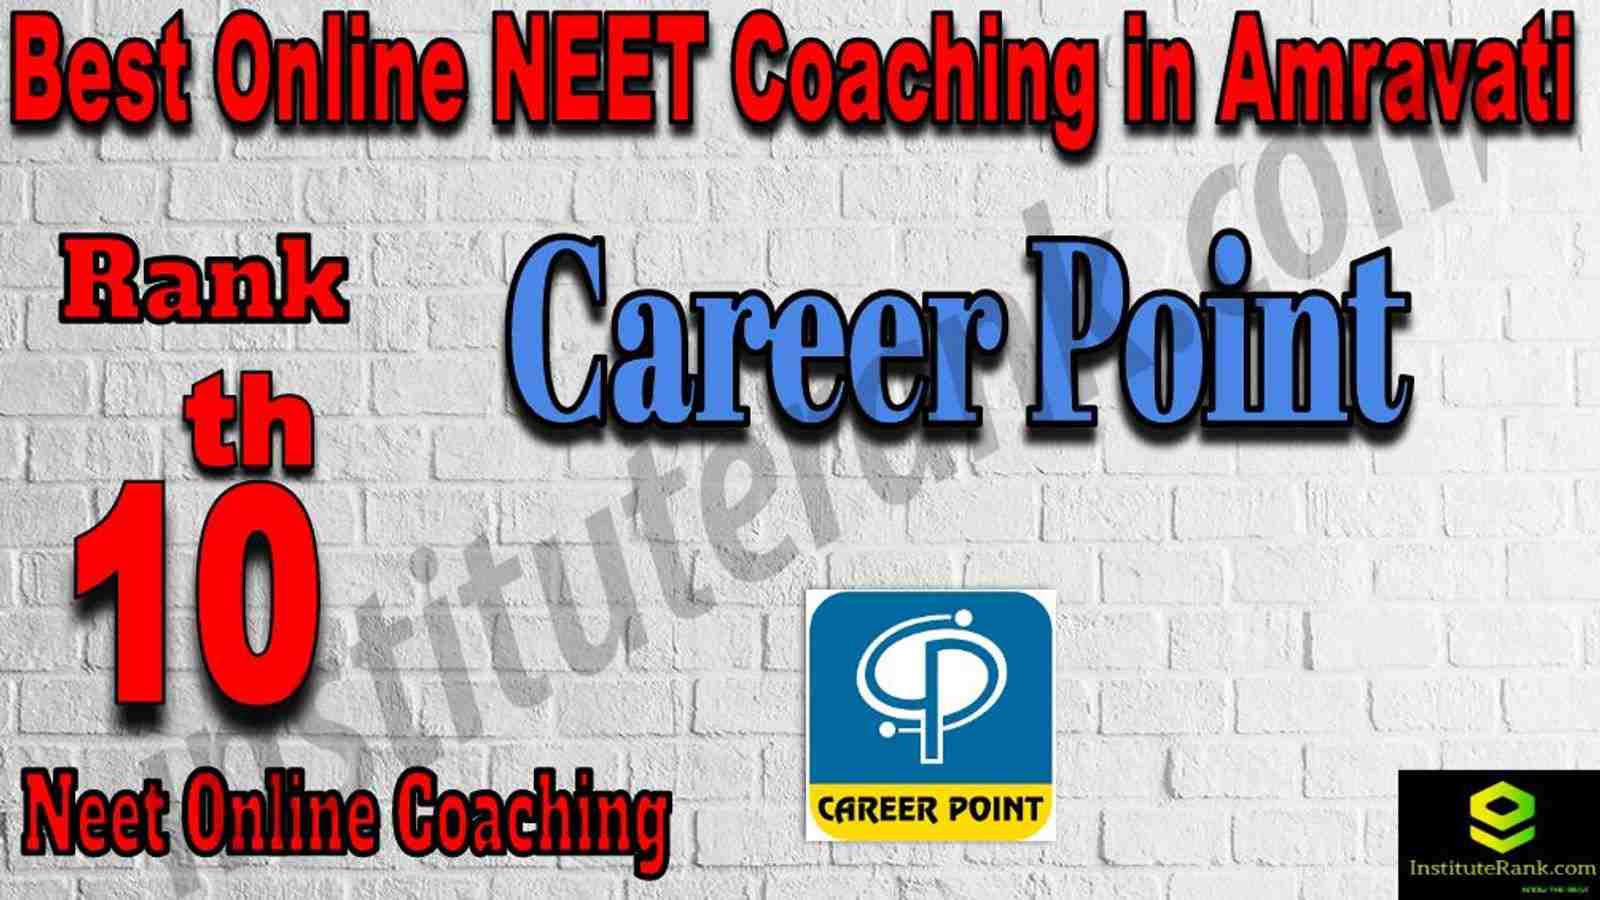 10th Best Online Neet Coaching in Amravati